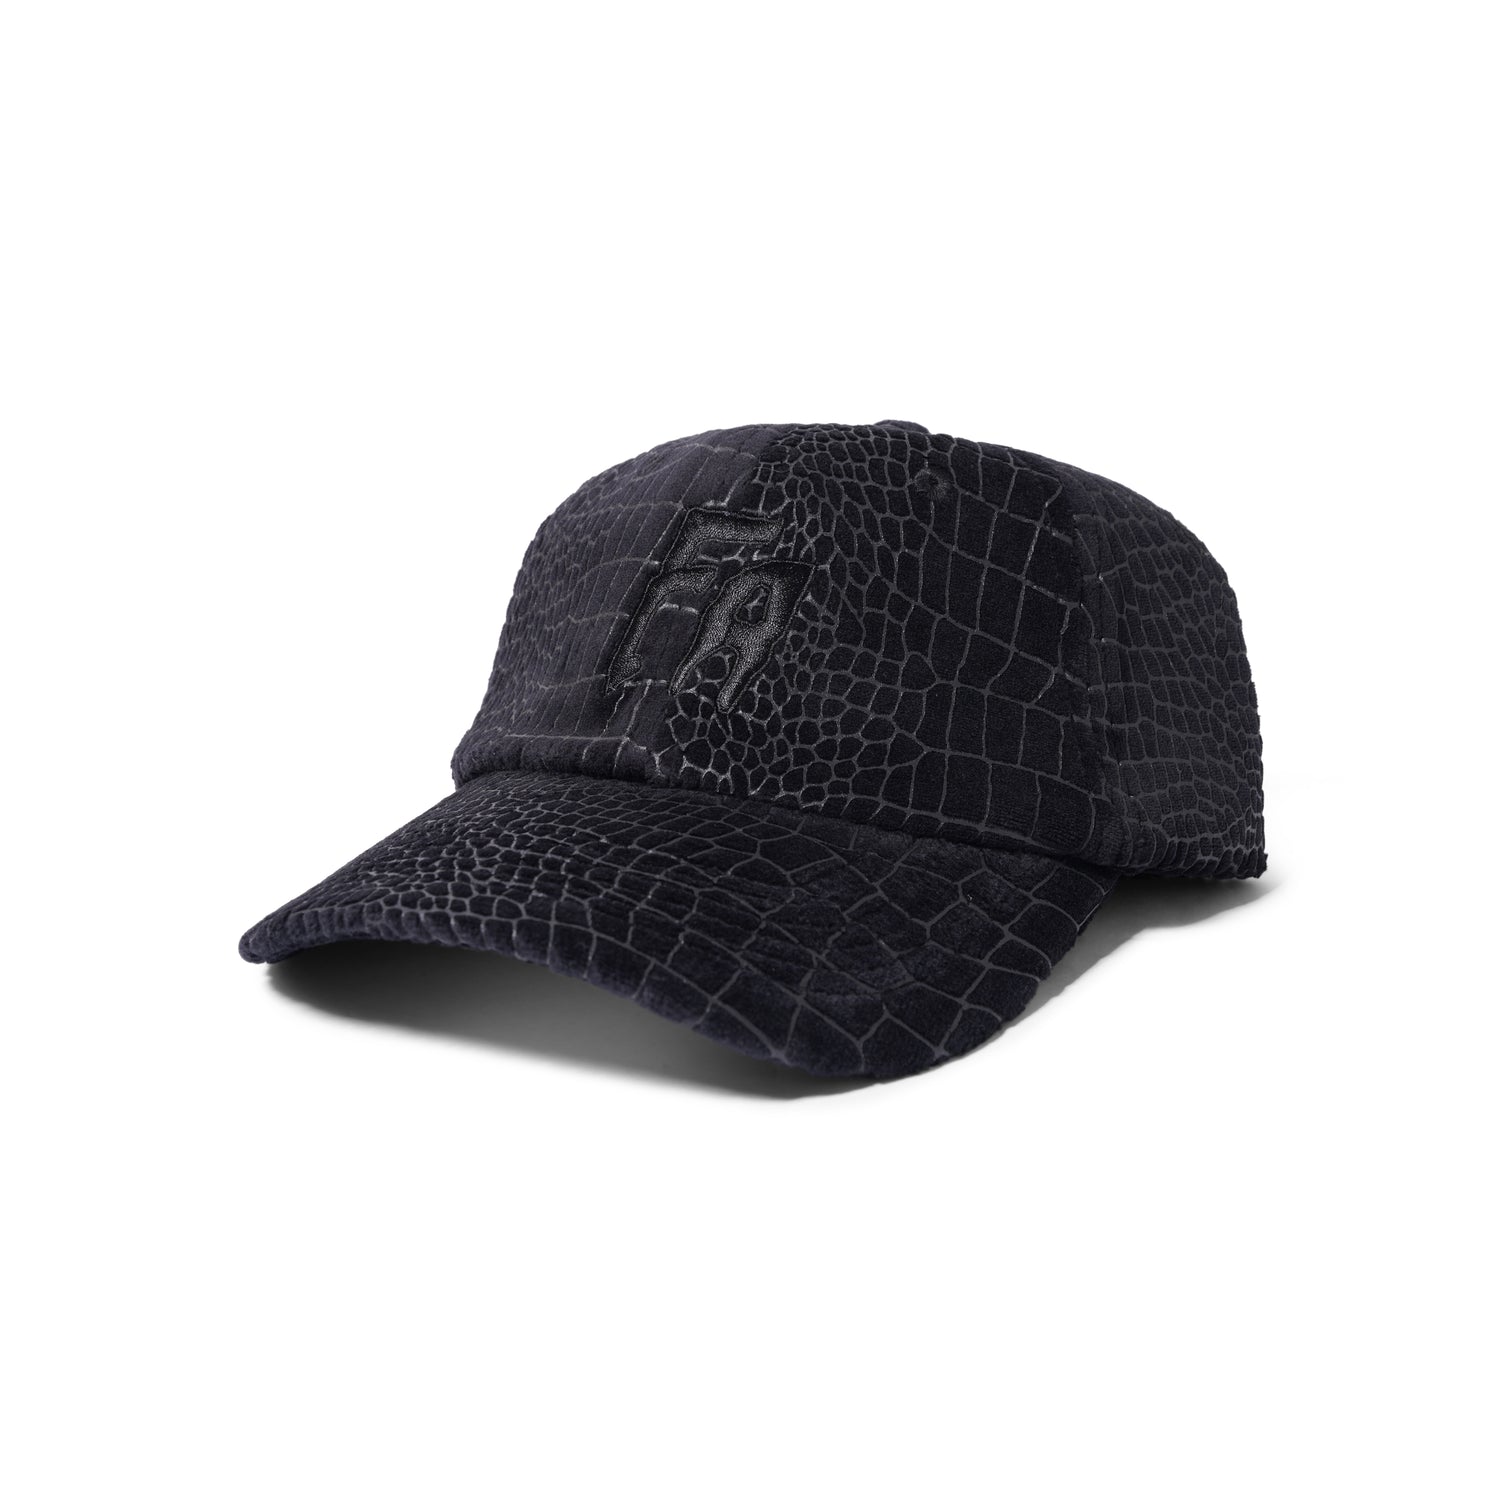 Croc Velour 6 Panel Hat, Black